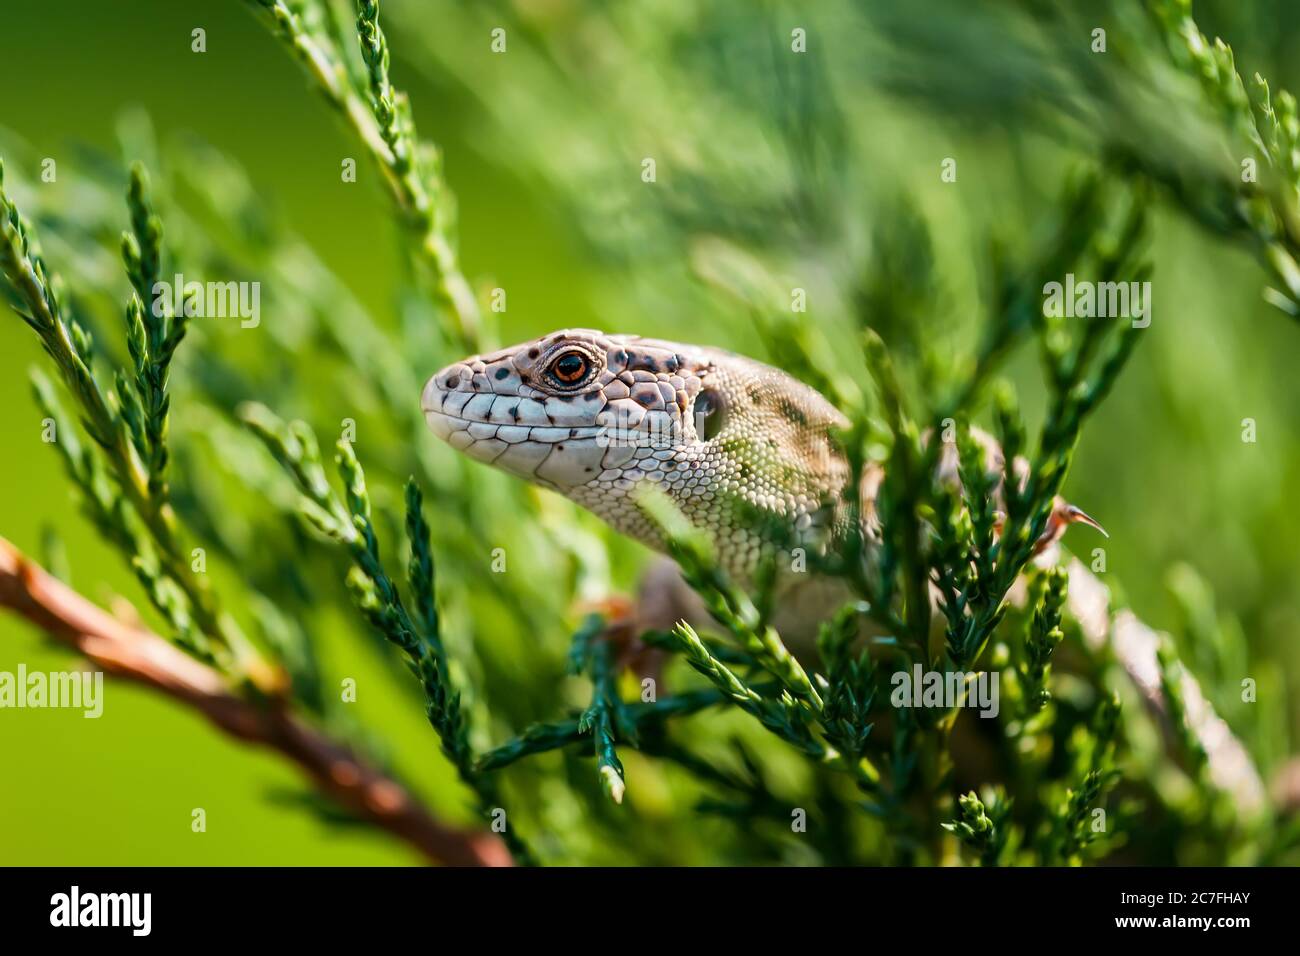 Female Lacerta Agilis Lizard Reptile Animal Macro Close-up Portrait Stock Photo